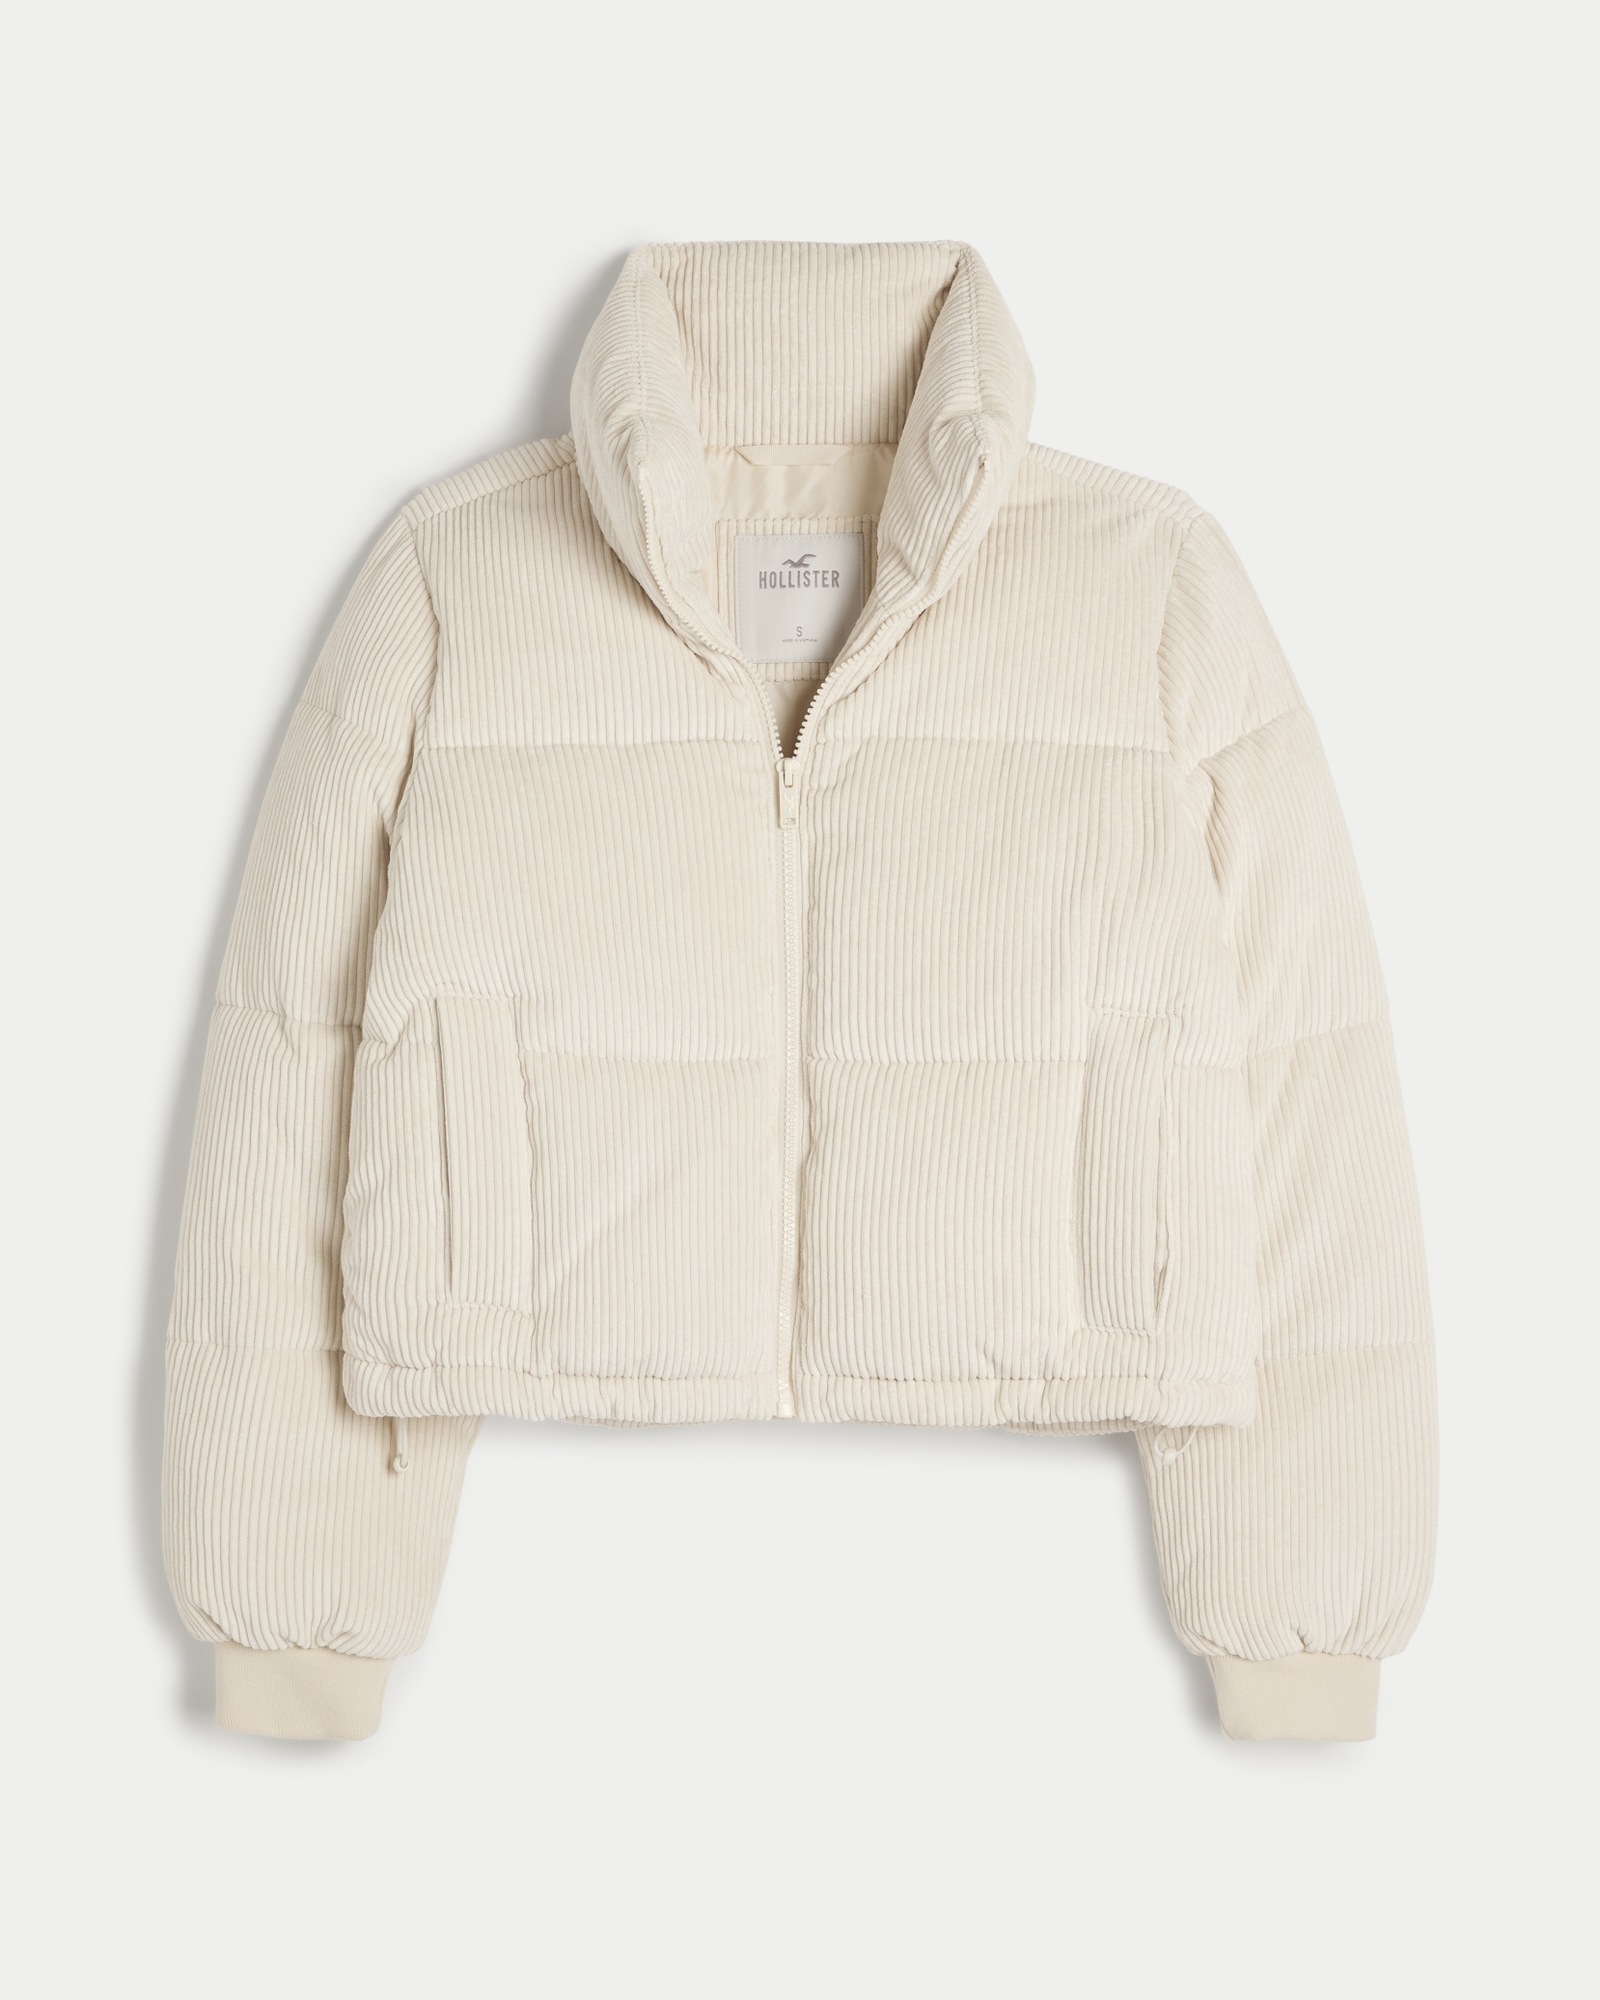 Hollister Puffer Jacket White - Sherpa-Lined Women's Size Medium